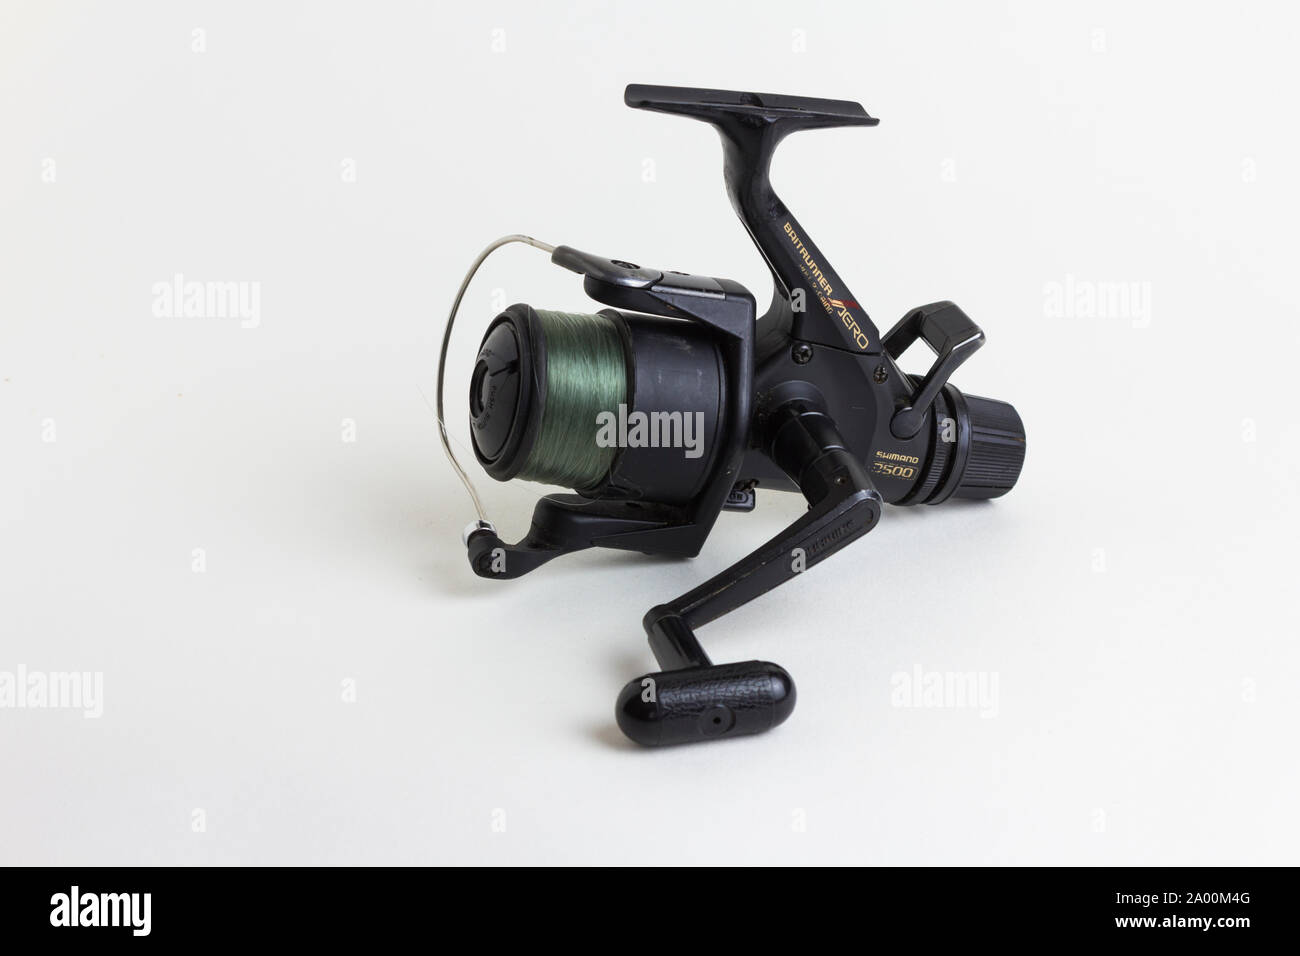 Shimano Aero 3500 baitrunner fixed spool fishing reel with a light